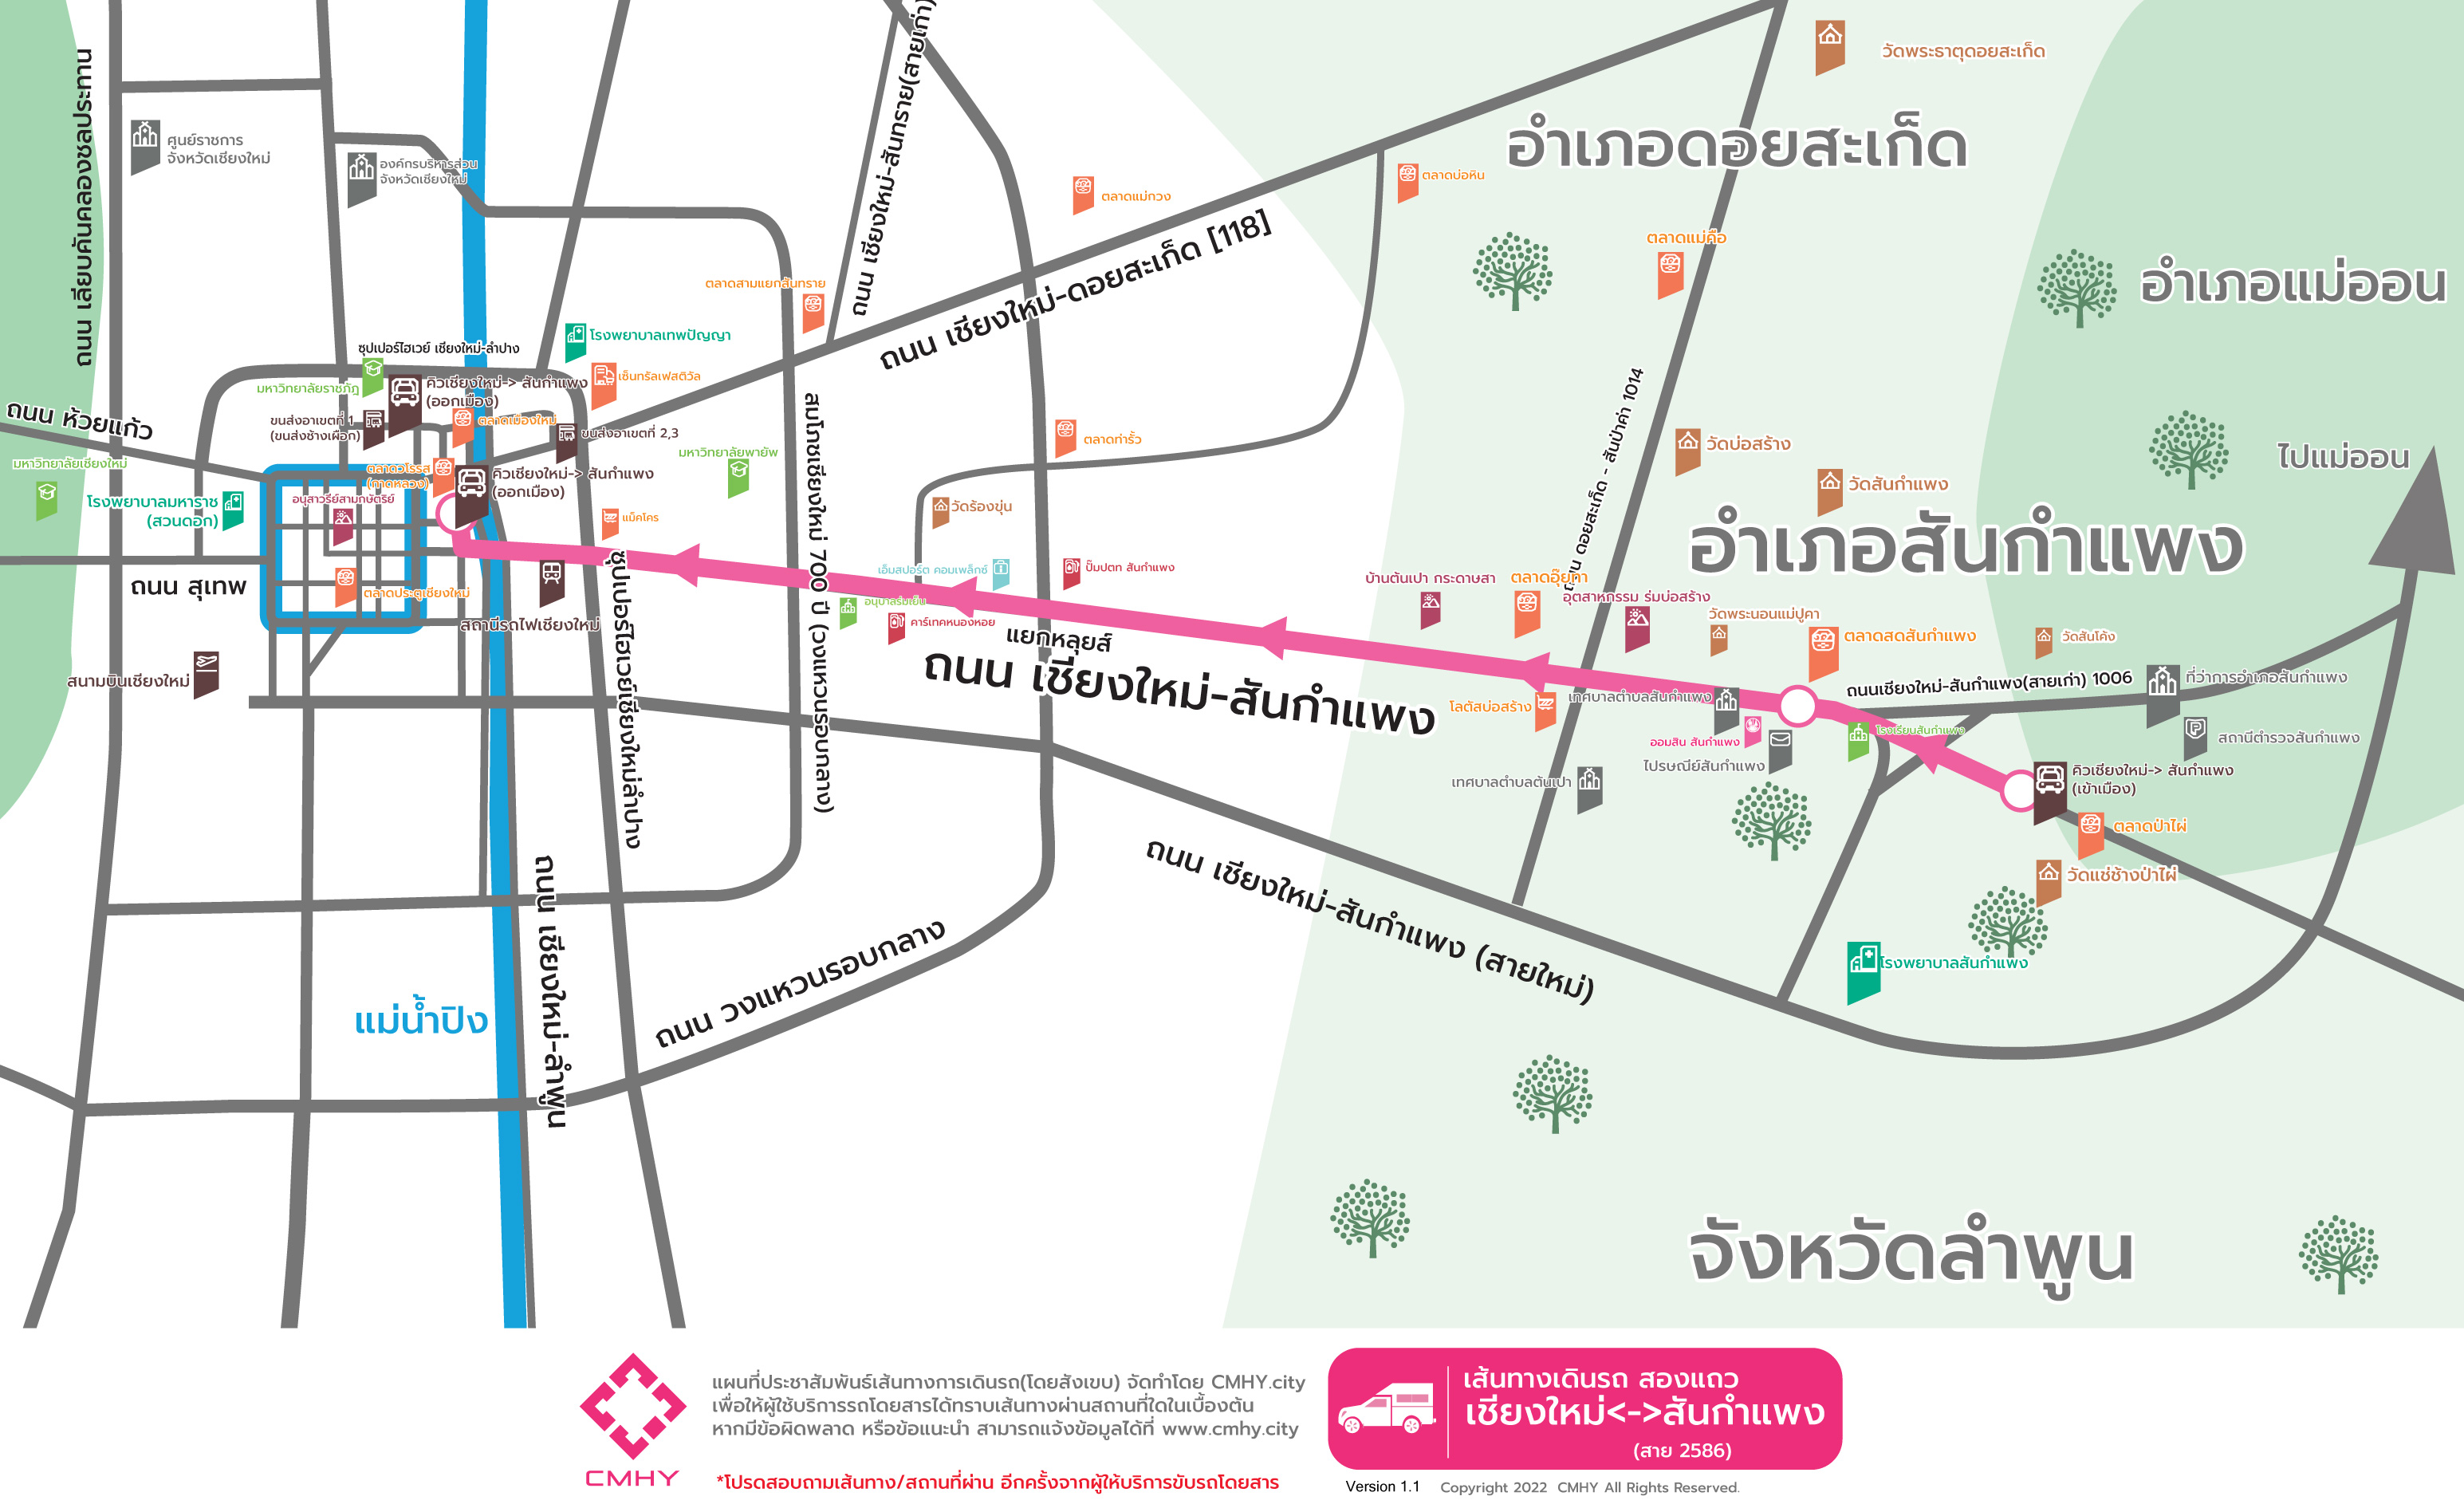 San Kham Phaeng to Chiangmai mini bus